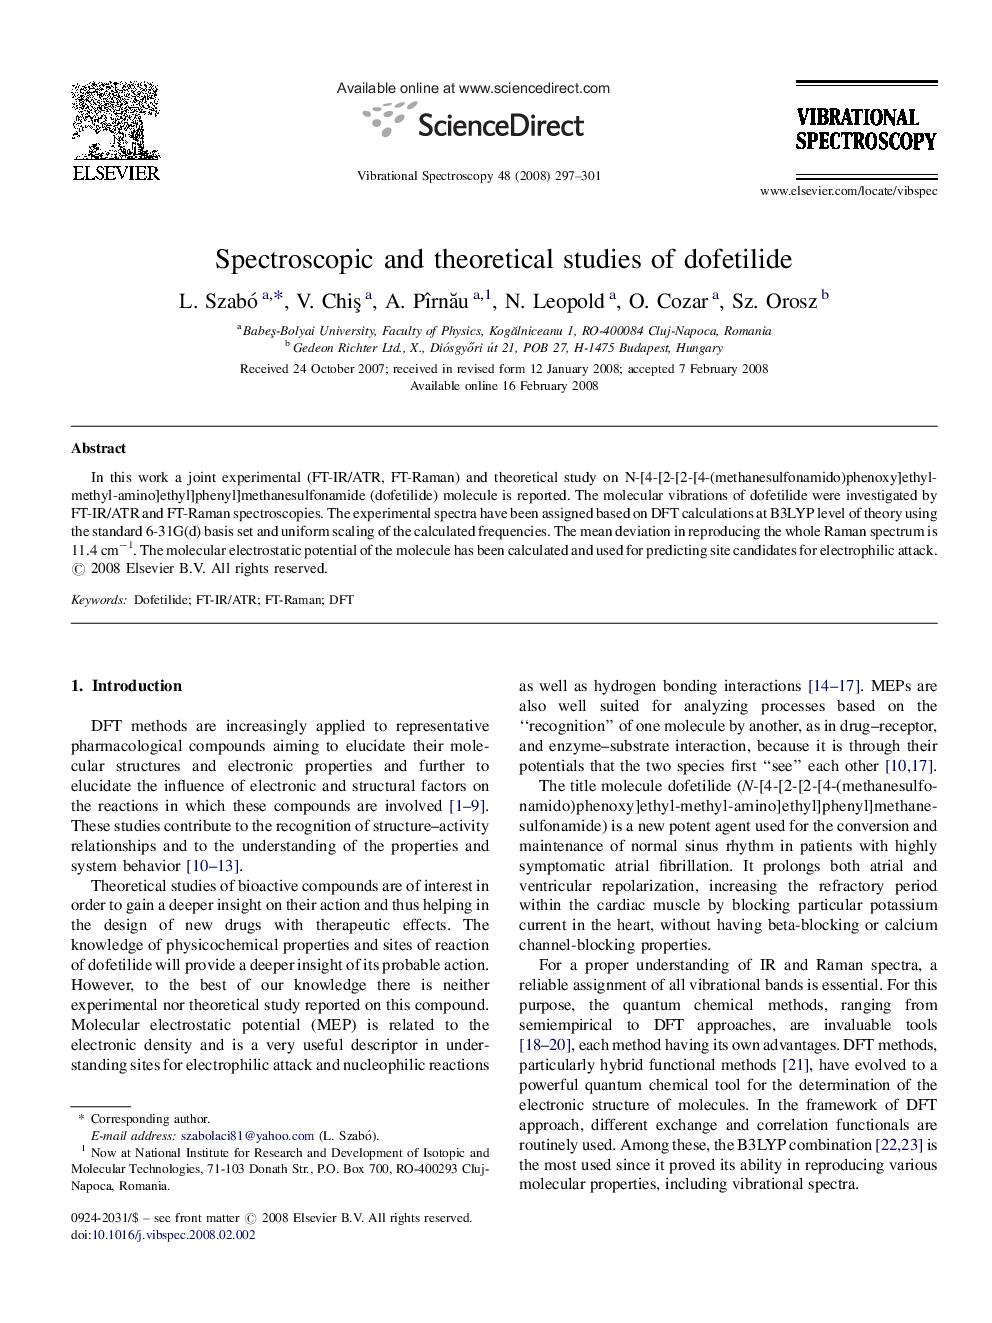 Spectroscopic and theoretical studies of dofetilide